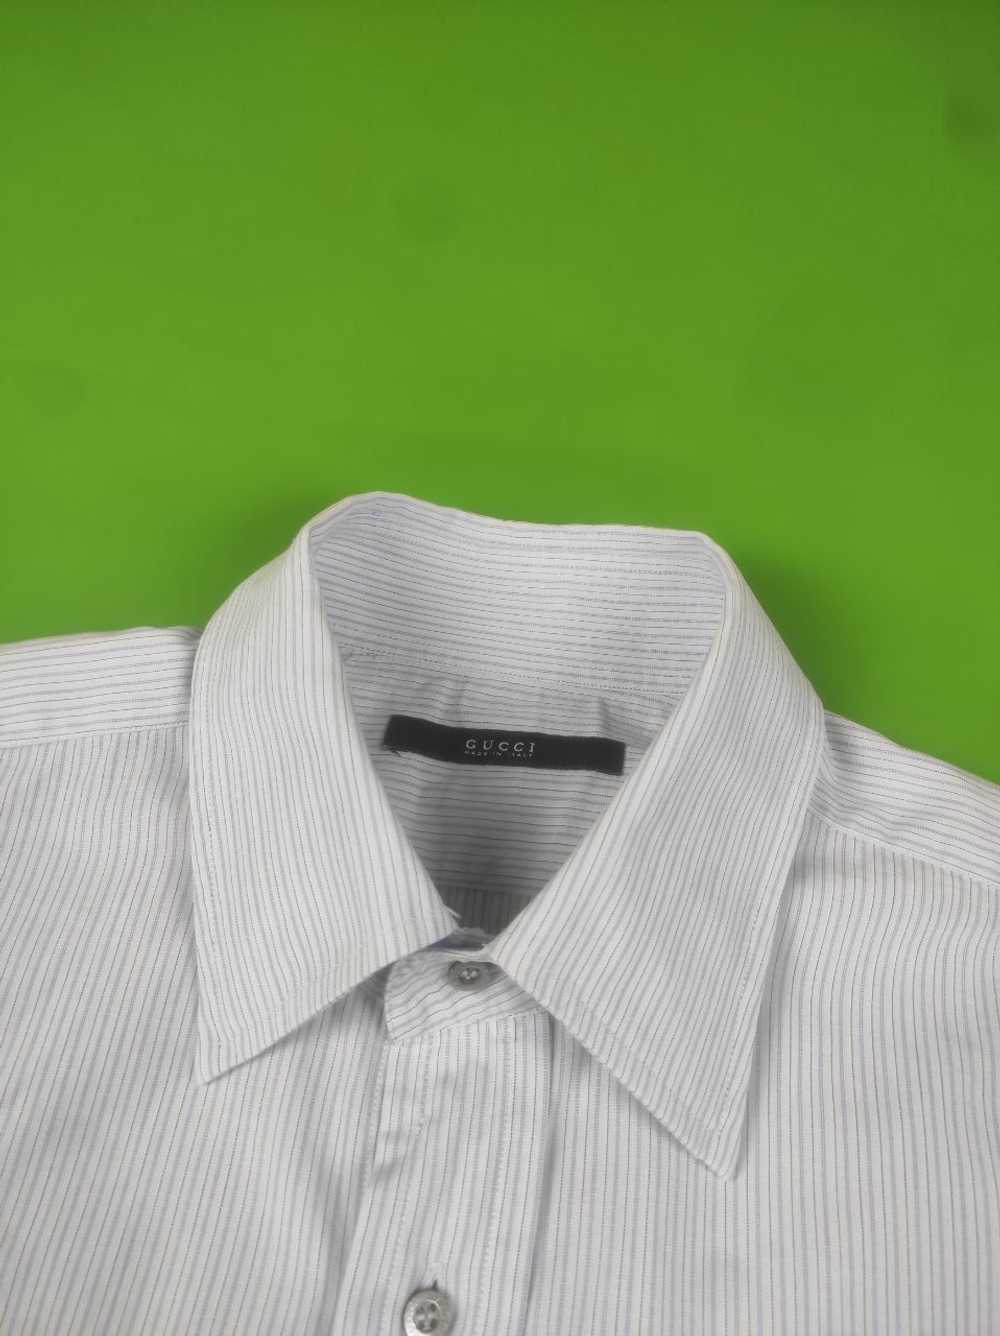 Gucci GUCCI Striped Button-Up Shirt - image 3